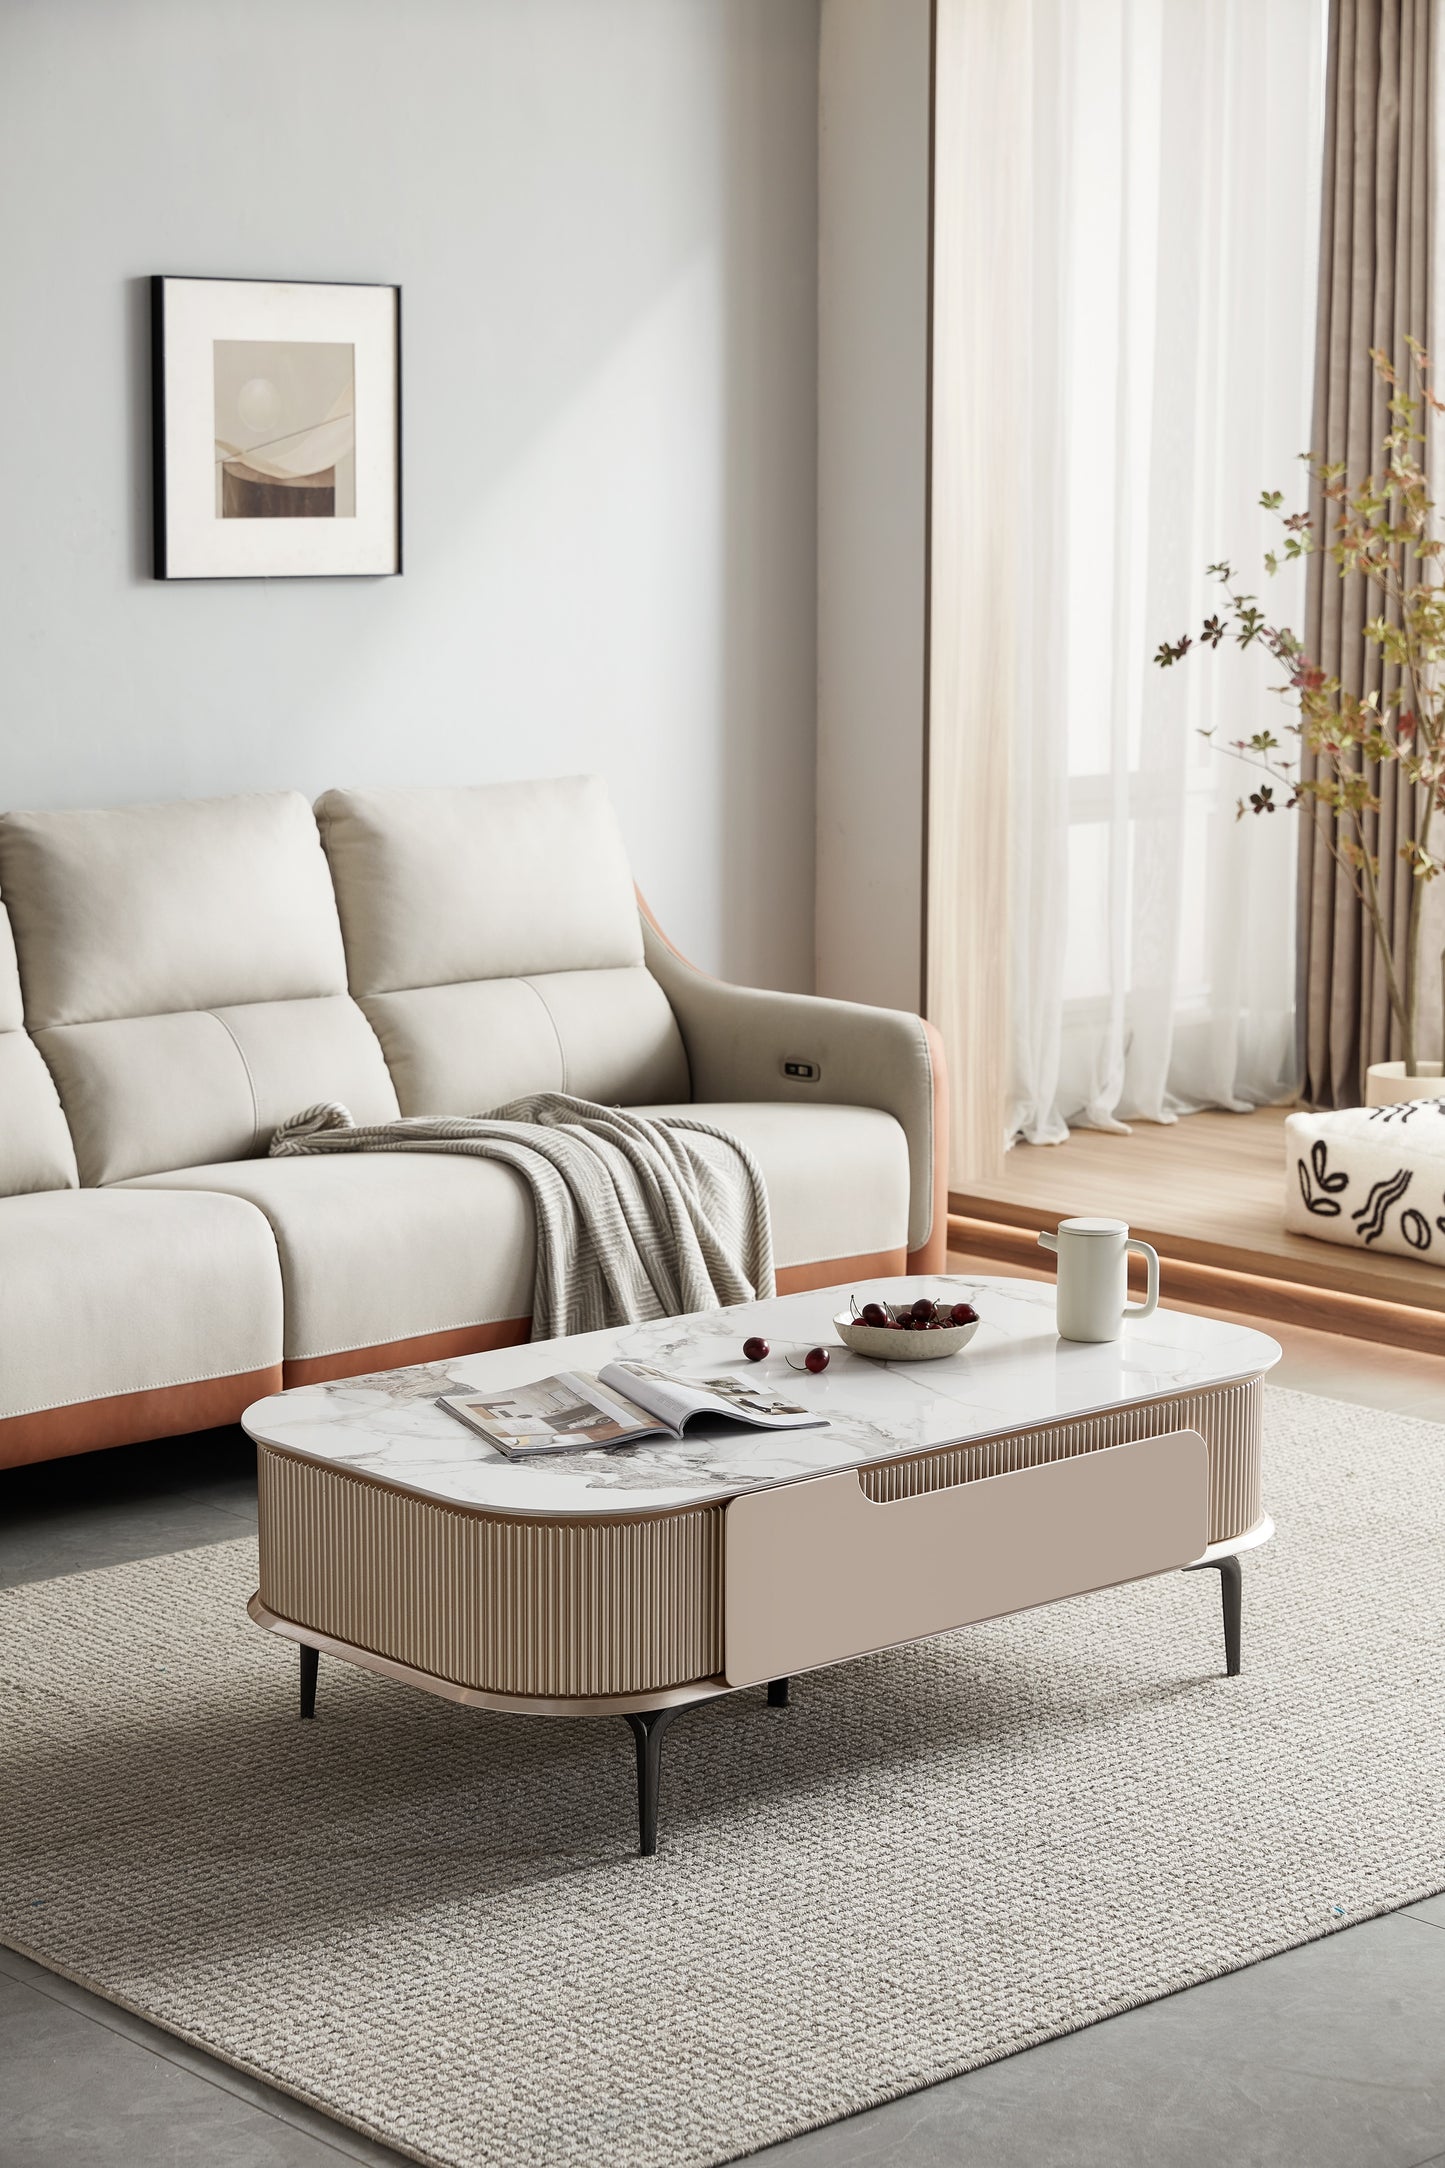 Furniture-sofa-coffee tea-throw blankets